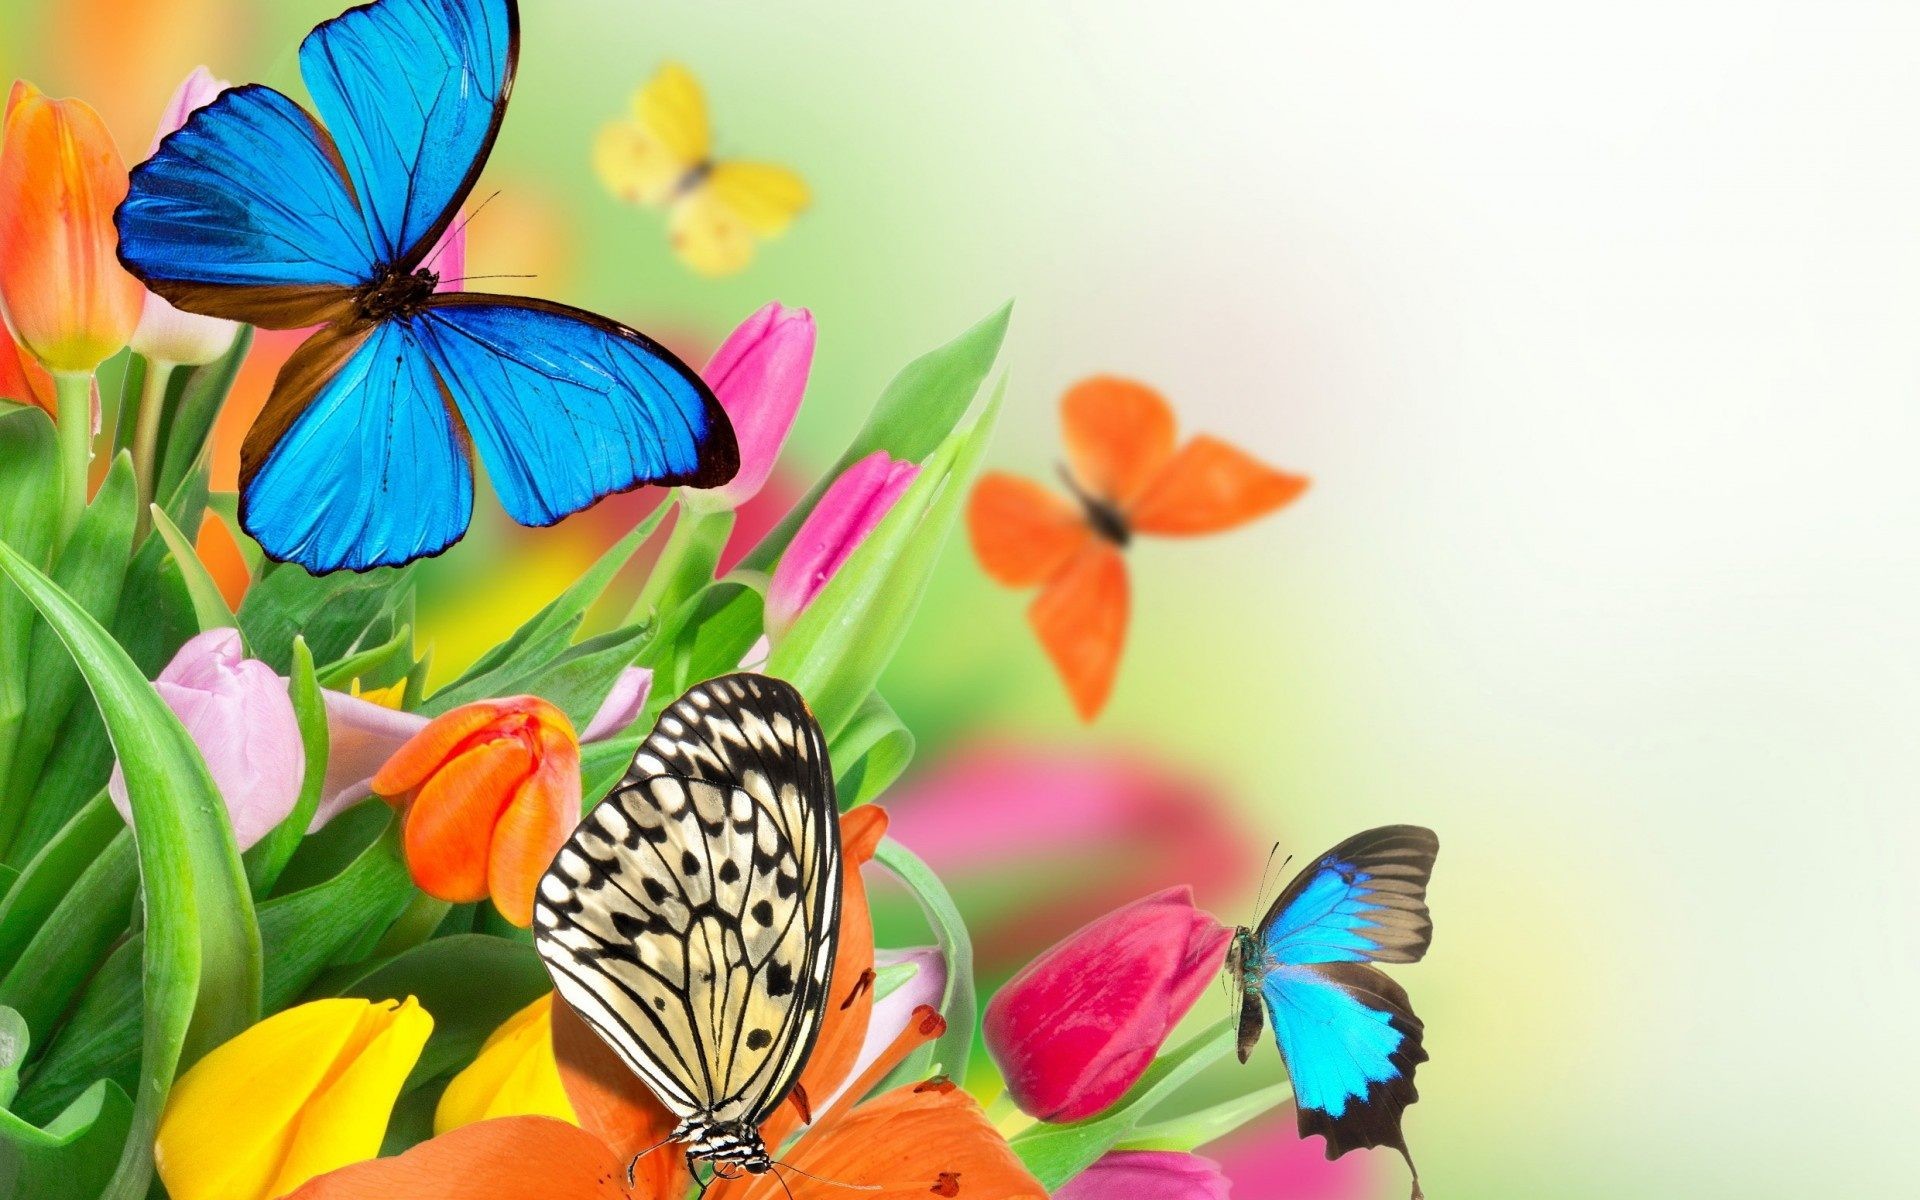 1920x1200 Colorful Butterfly On Flower Wallpaper For Desktop amp Mobile